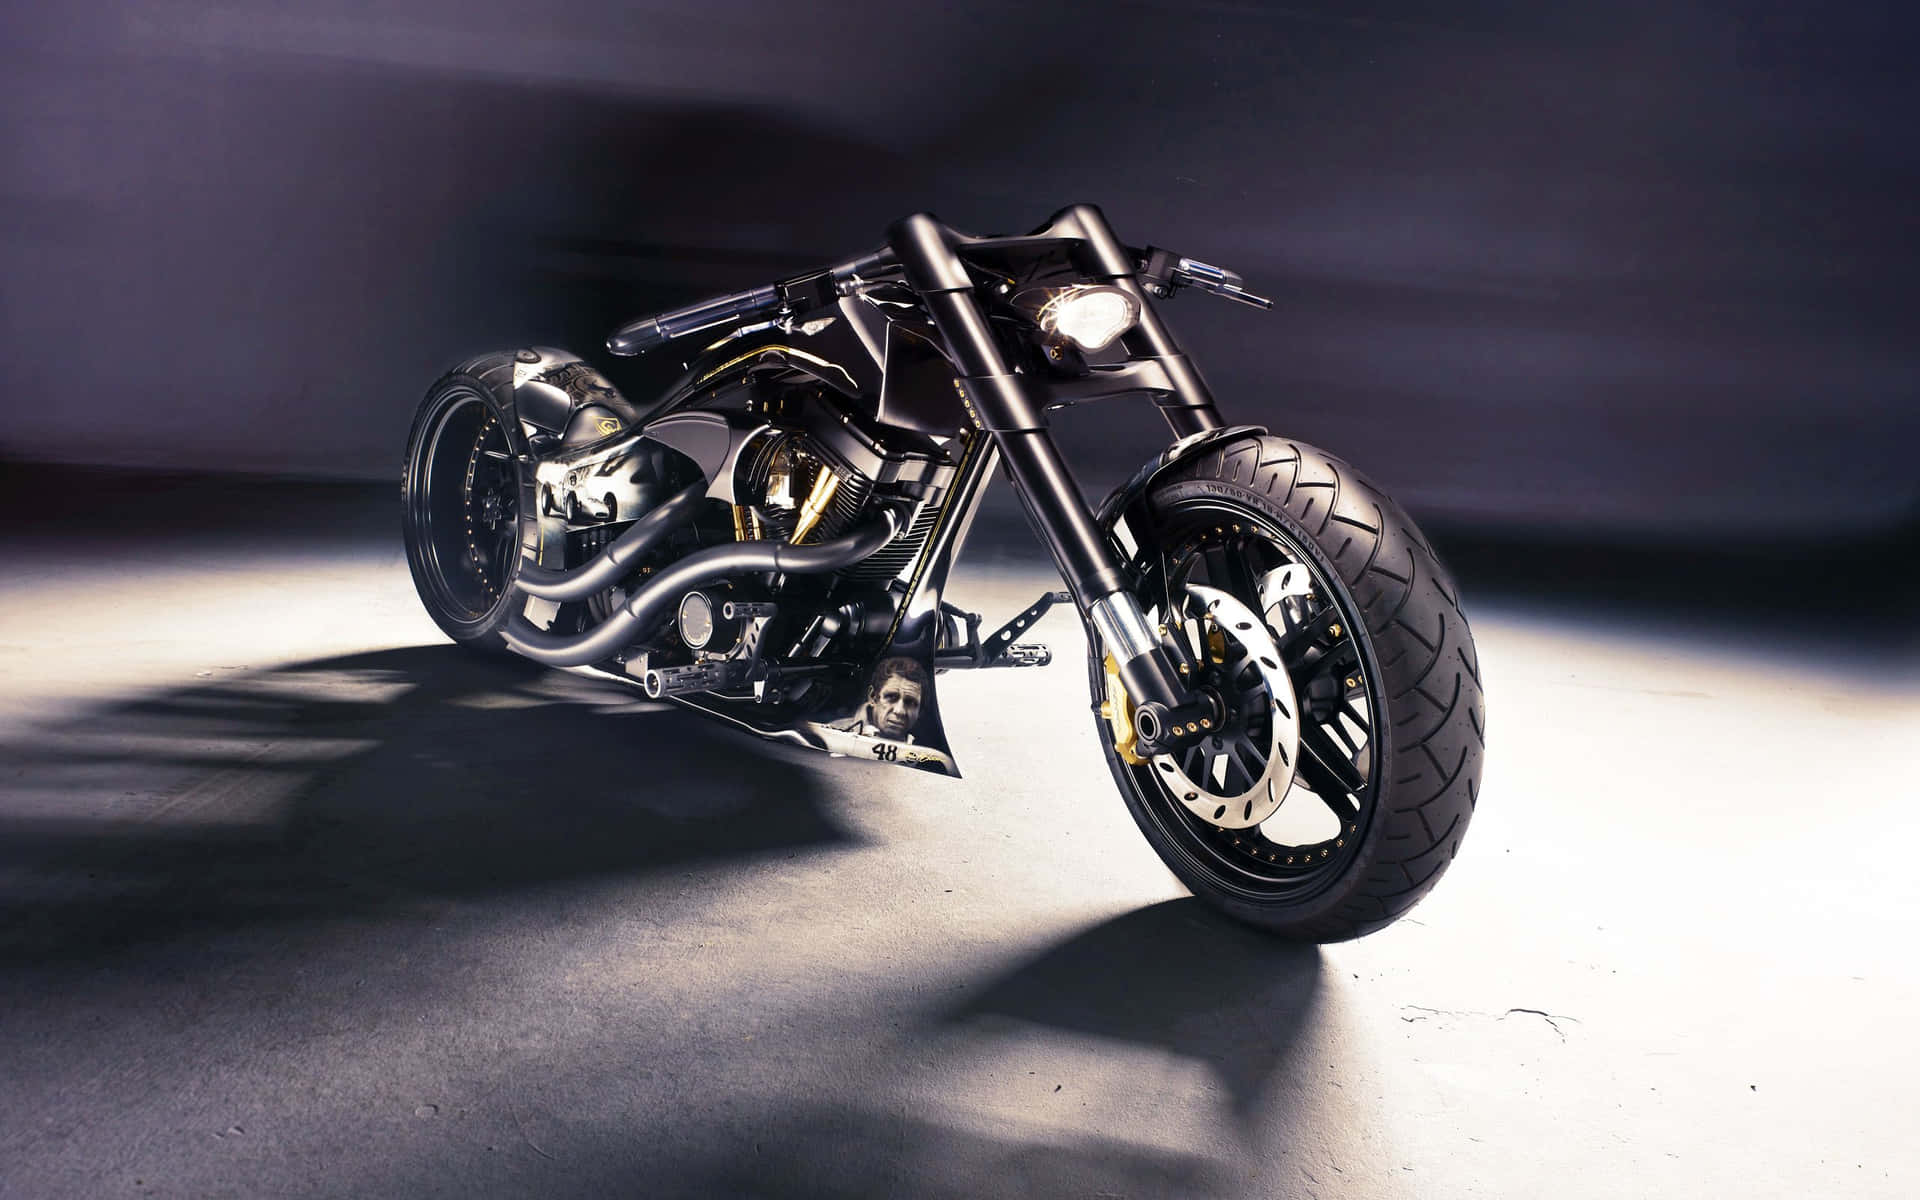 Coolall Black Harley Davidson Bike Bakgrund